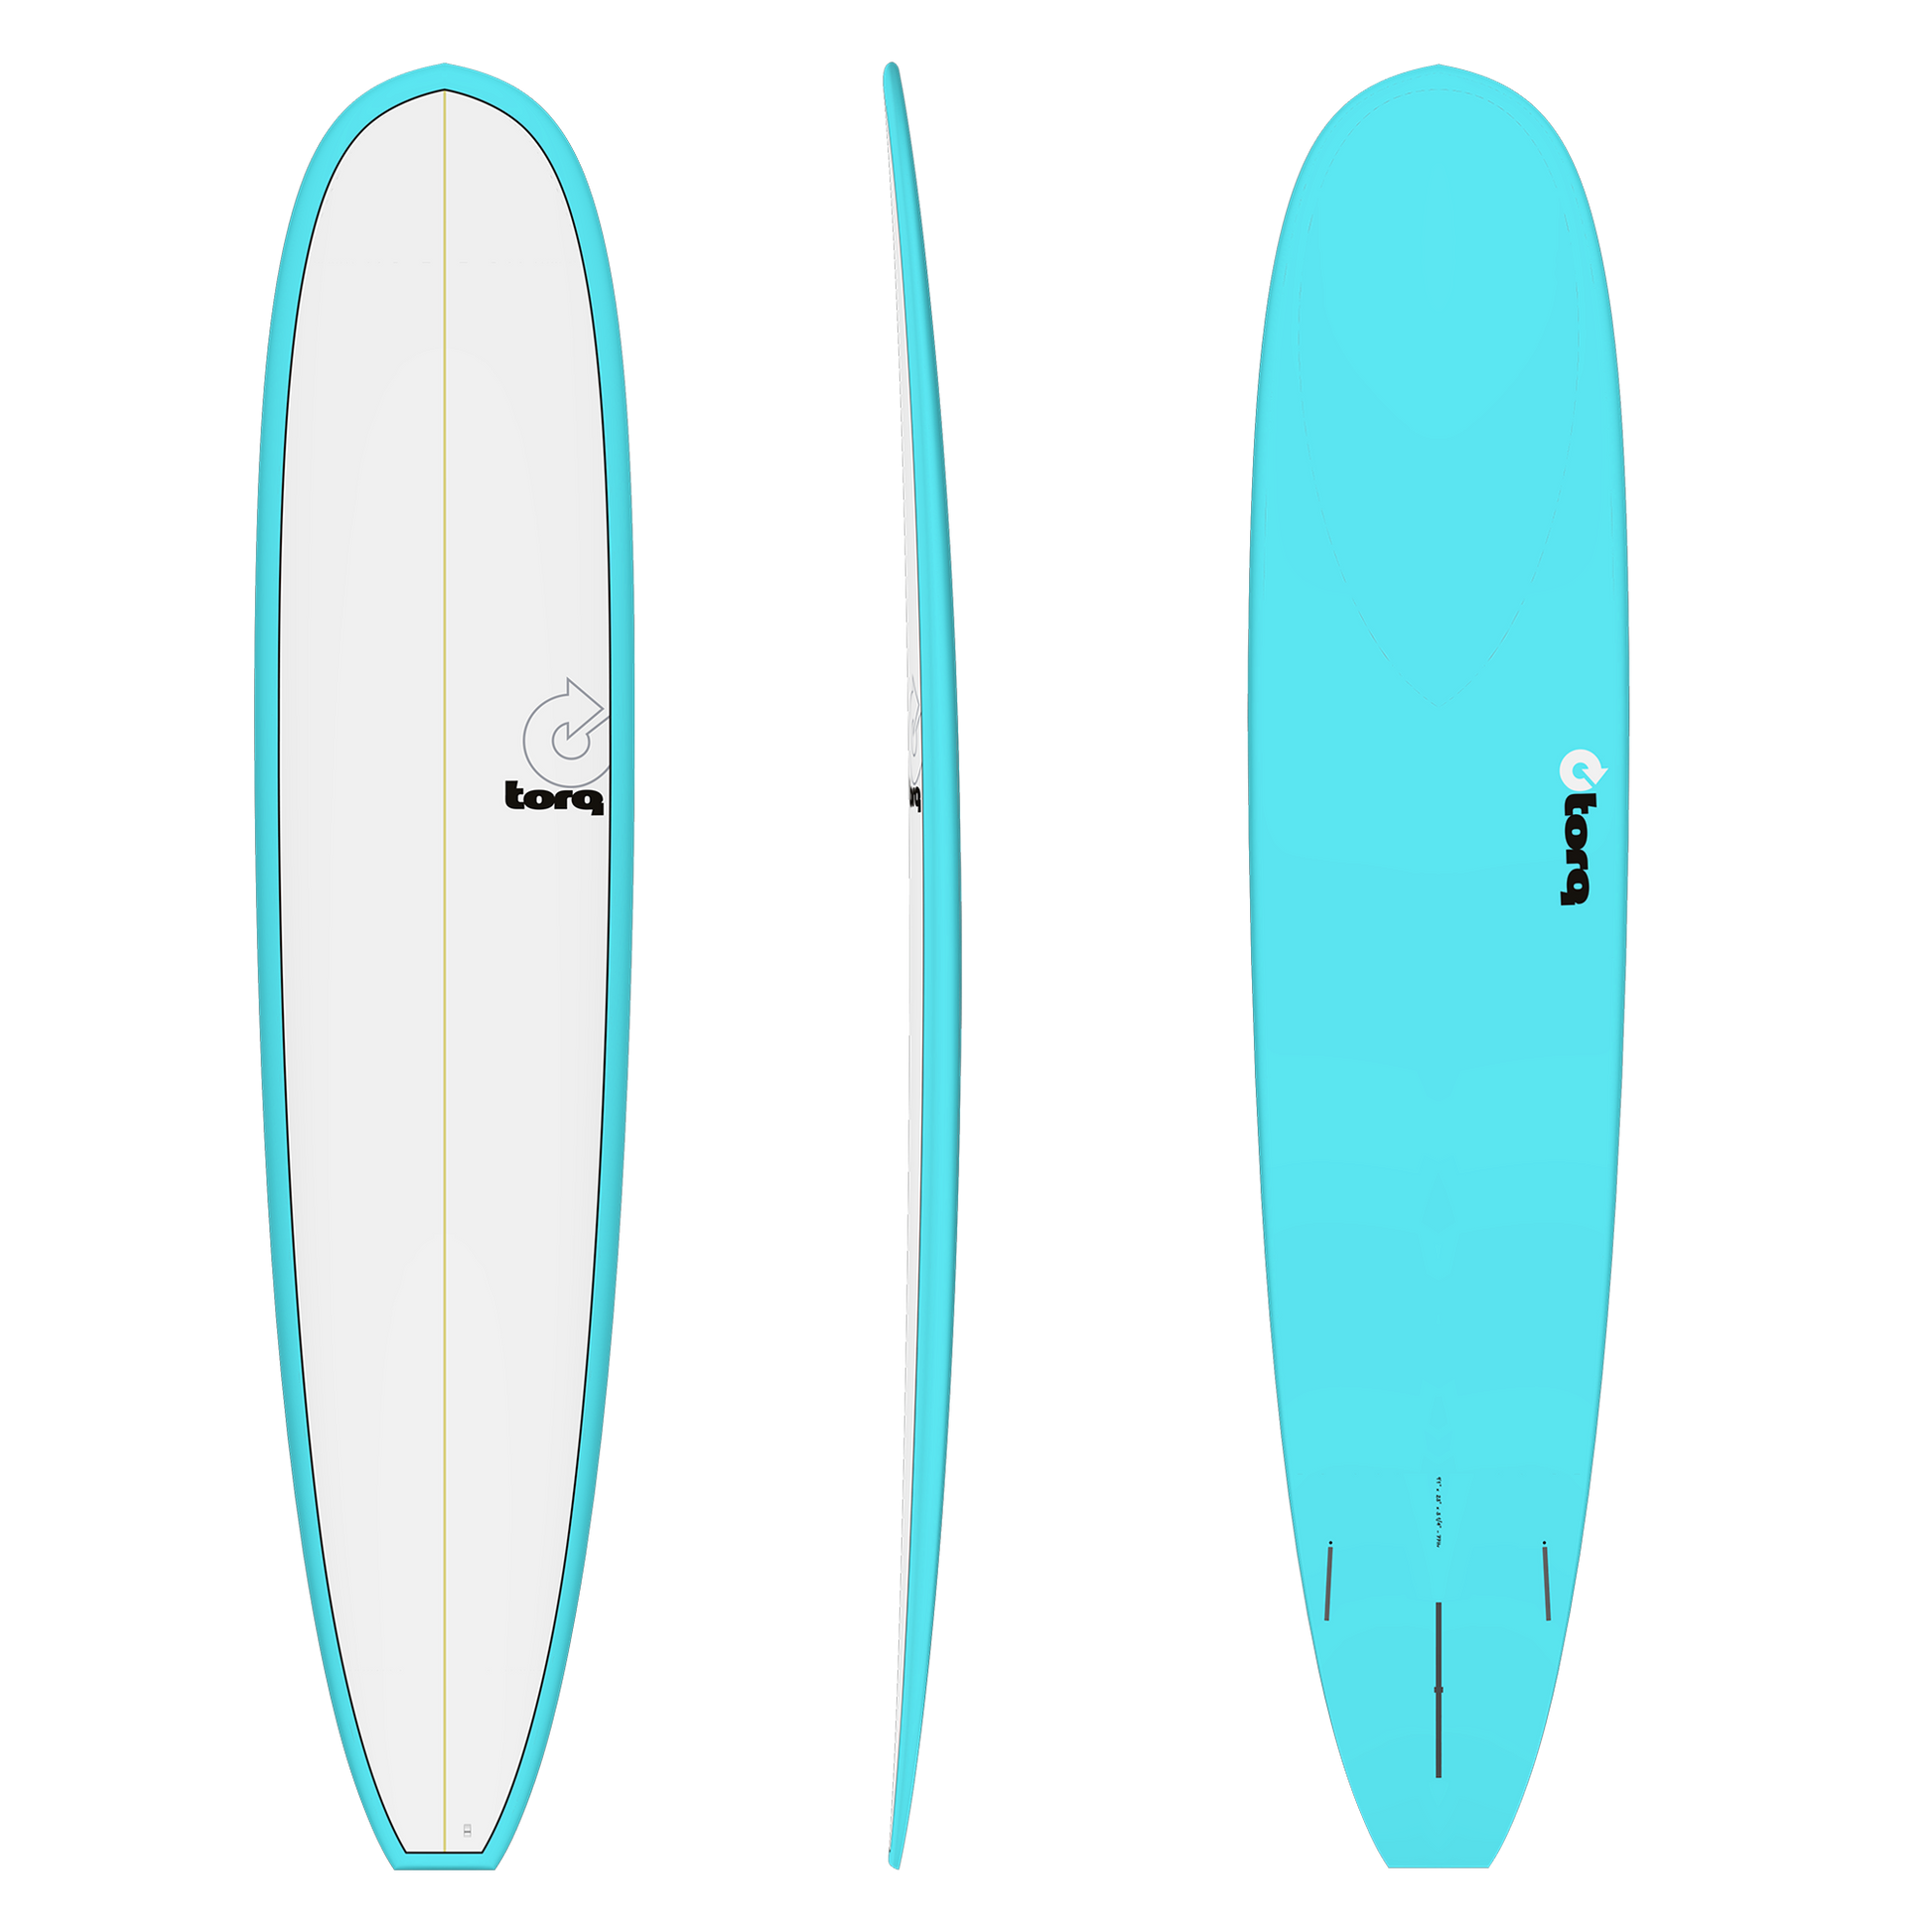 Torq 9'6" Noserider Longboard Surfboard - White Deck Miami Blue Bottom Surfboard